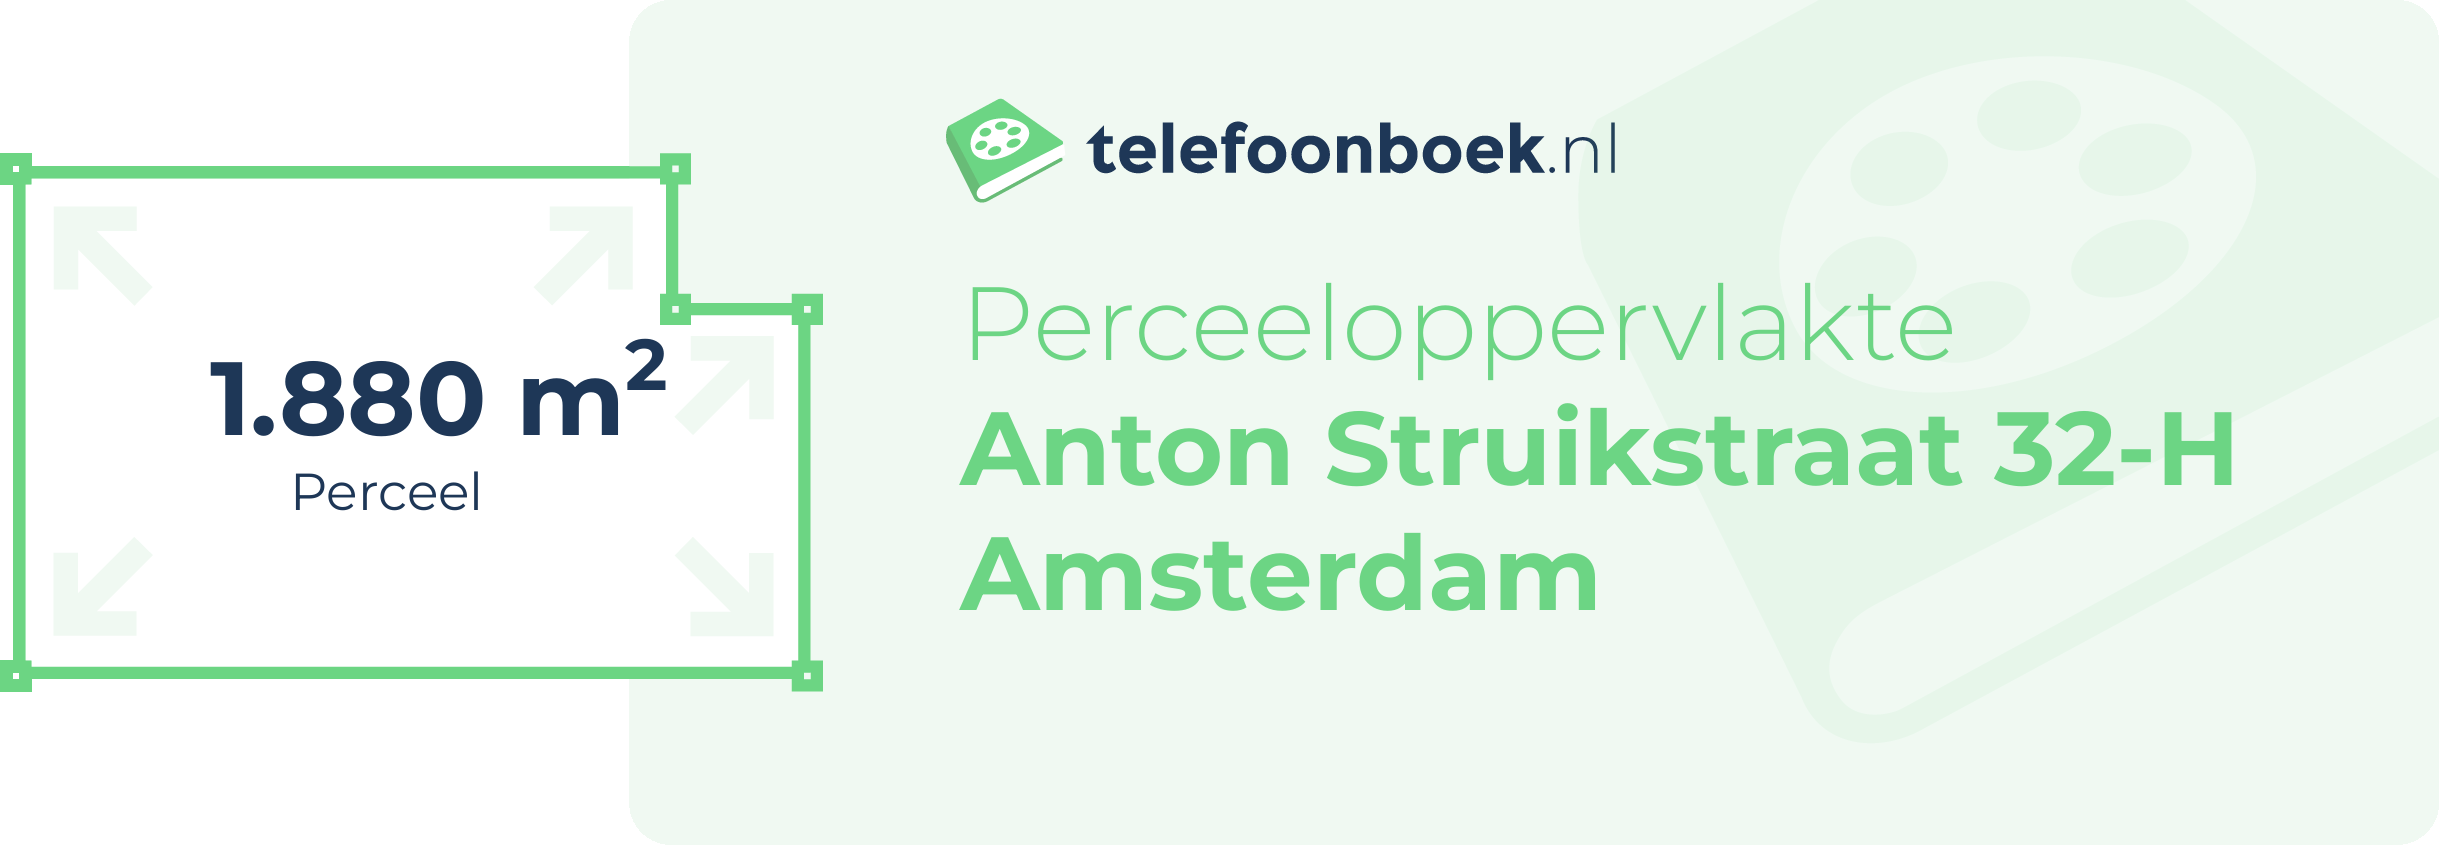 Perceeloppervlakte Anton Struikstraat 32-H Amsterdam